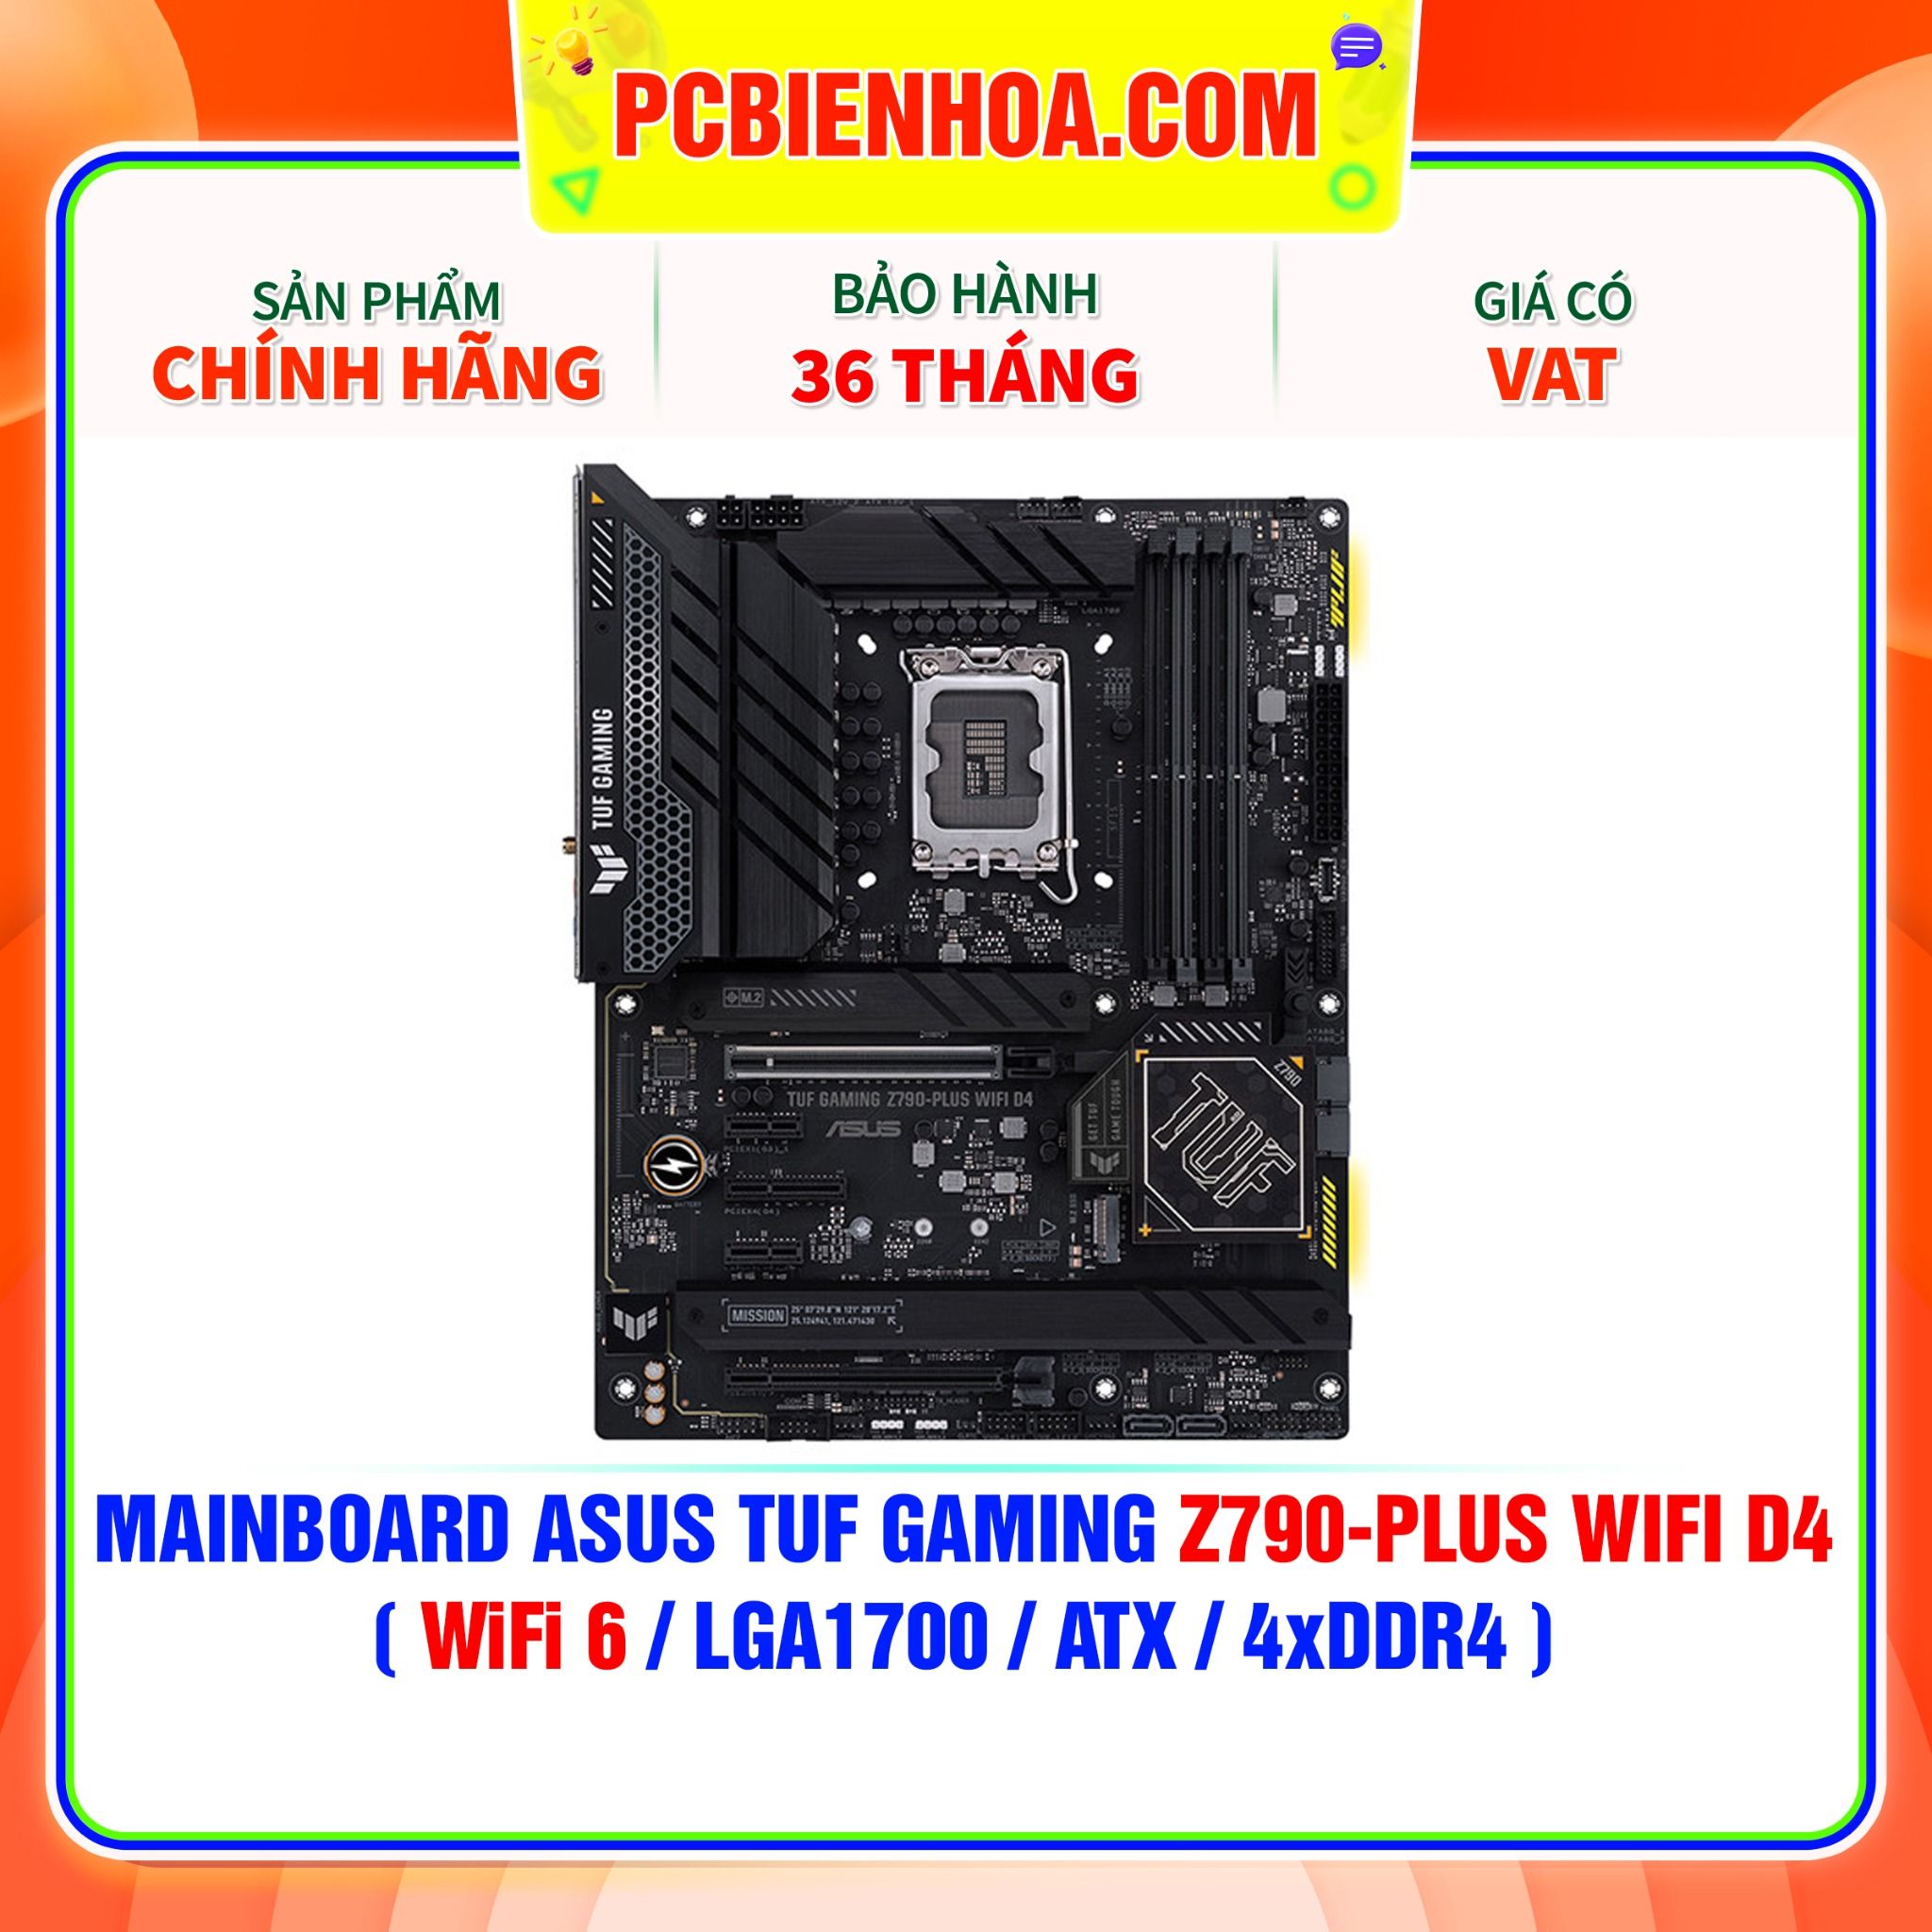  MAINBOARD ASUS TUF GAMING Z790-PLUS WIFI D4 ( WiFi 6 / LGA1700 / ATX / 4xDDR4 ) 